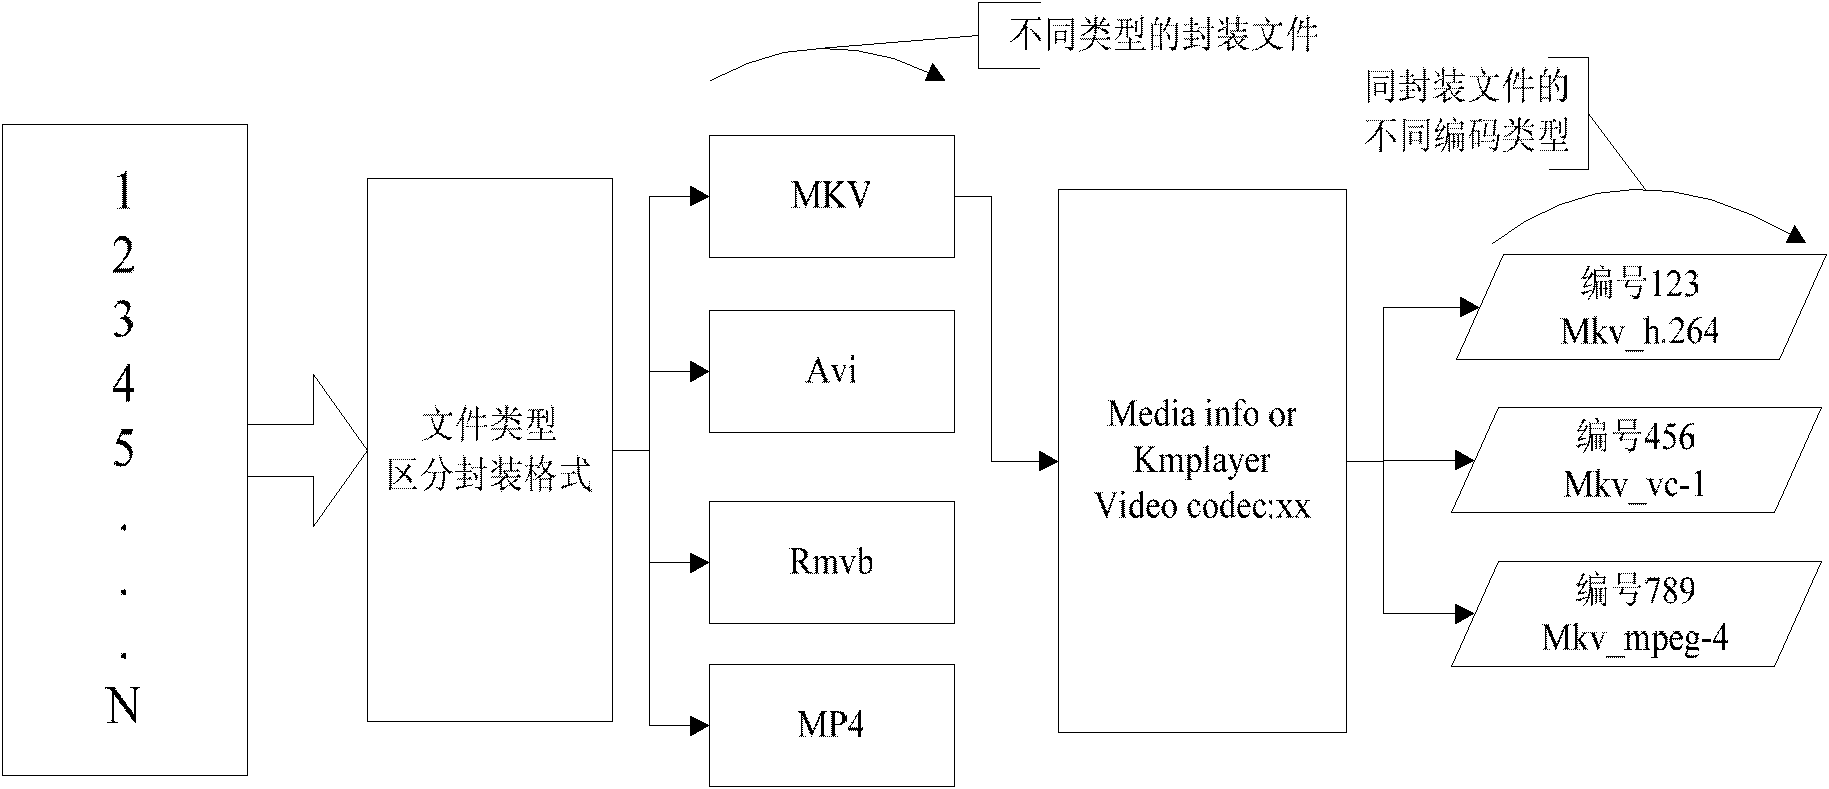 Efficient test method for video decoding